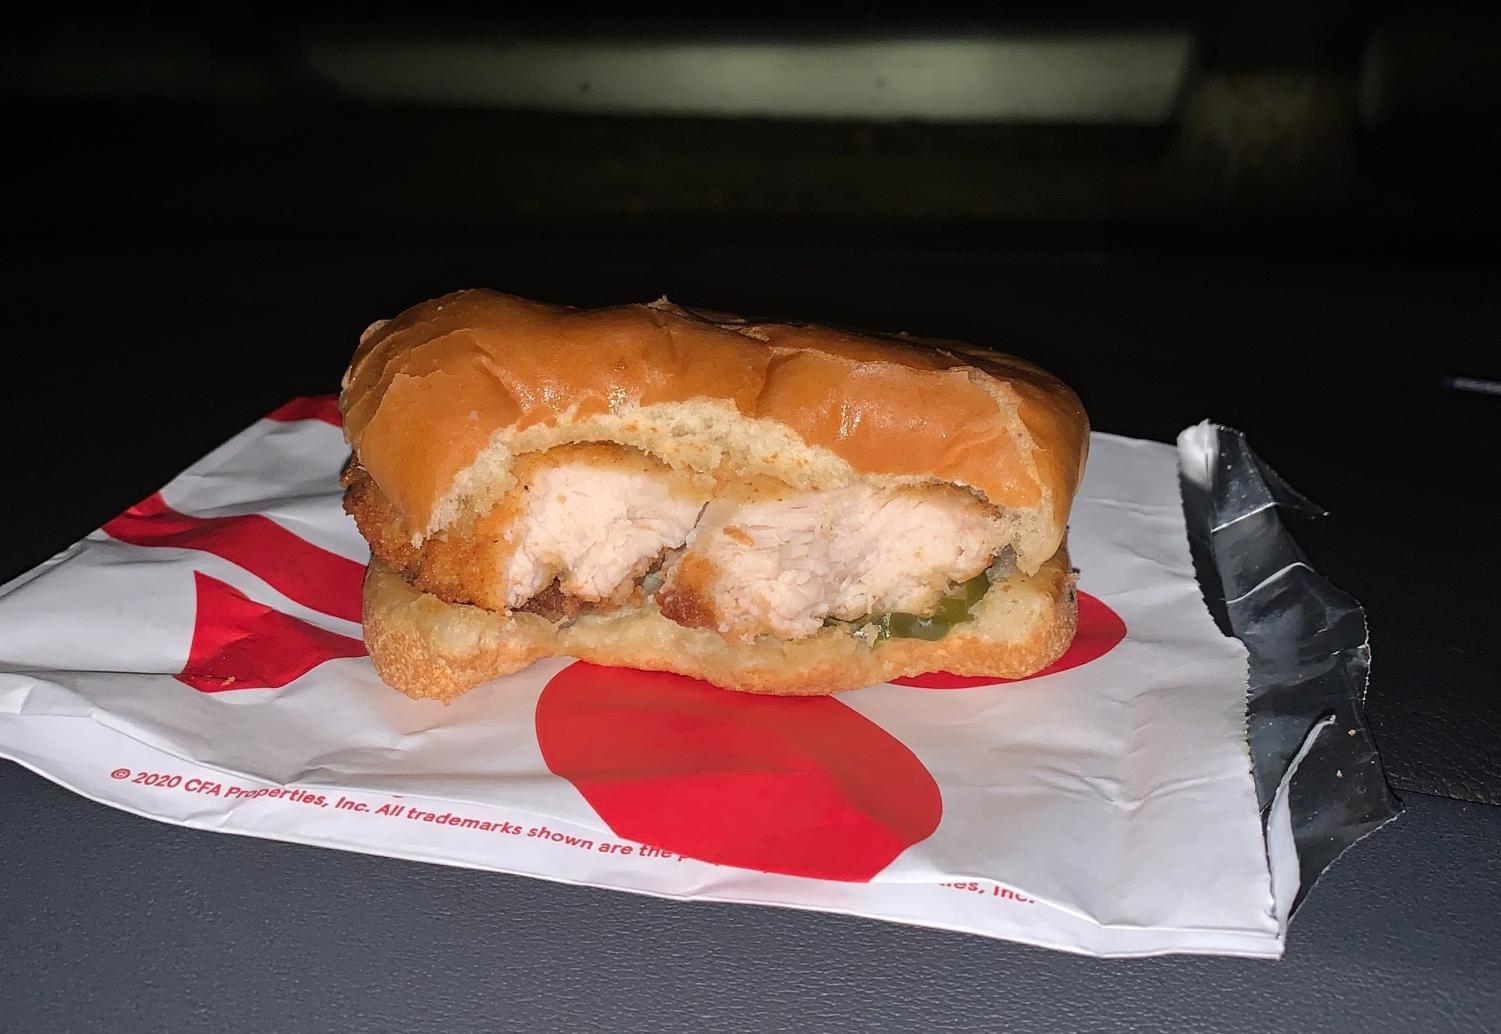 The+fried+chicken+sandwich+war%3A+McDonalds%2C+Popeyes%2C+etc.